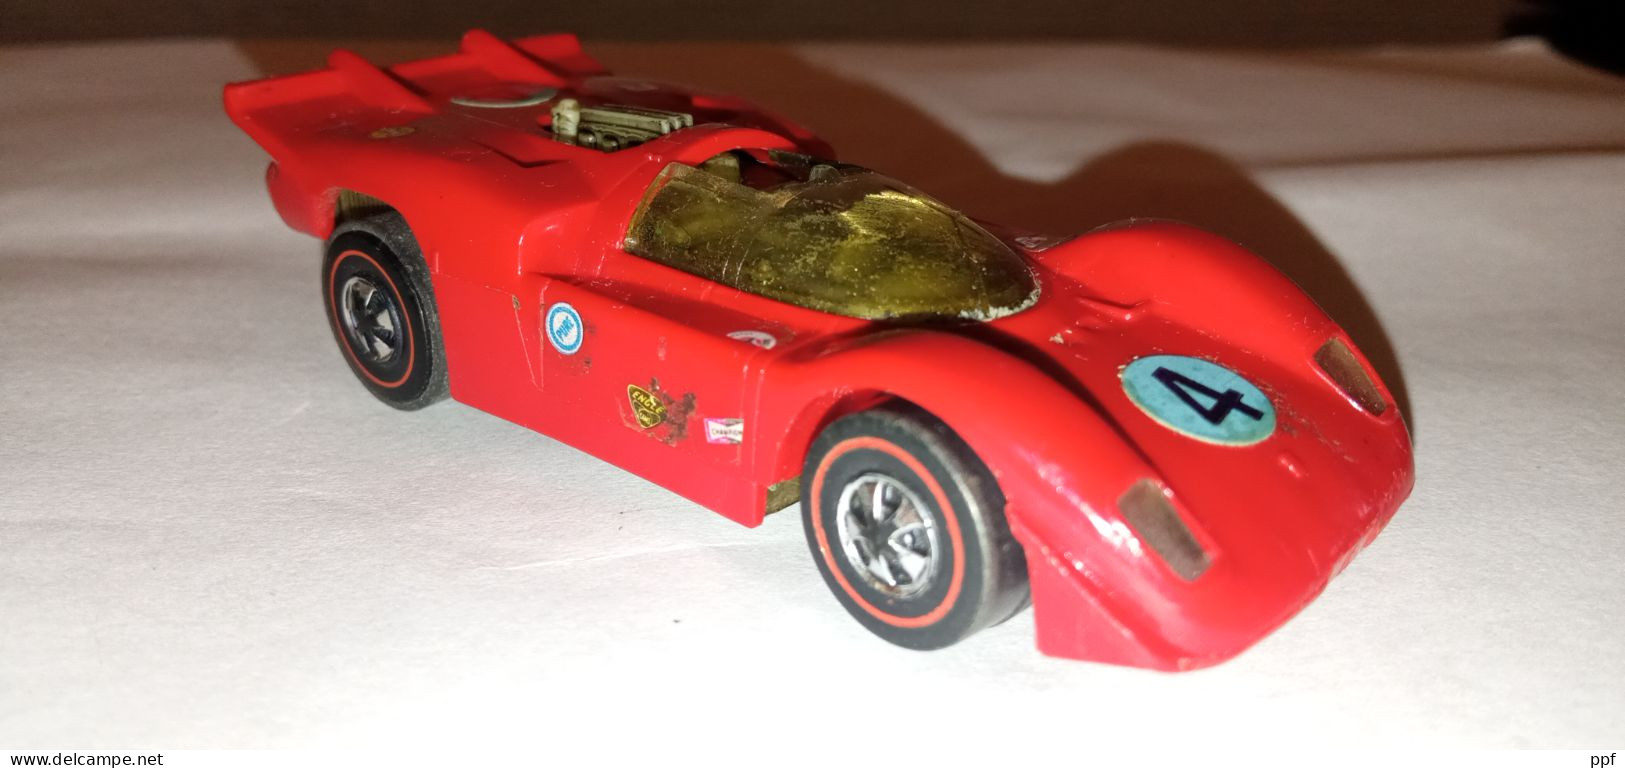 Hotwheels redline Ferrari very rare!